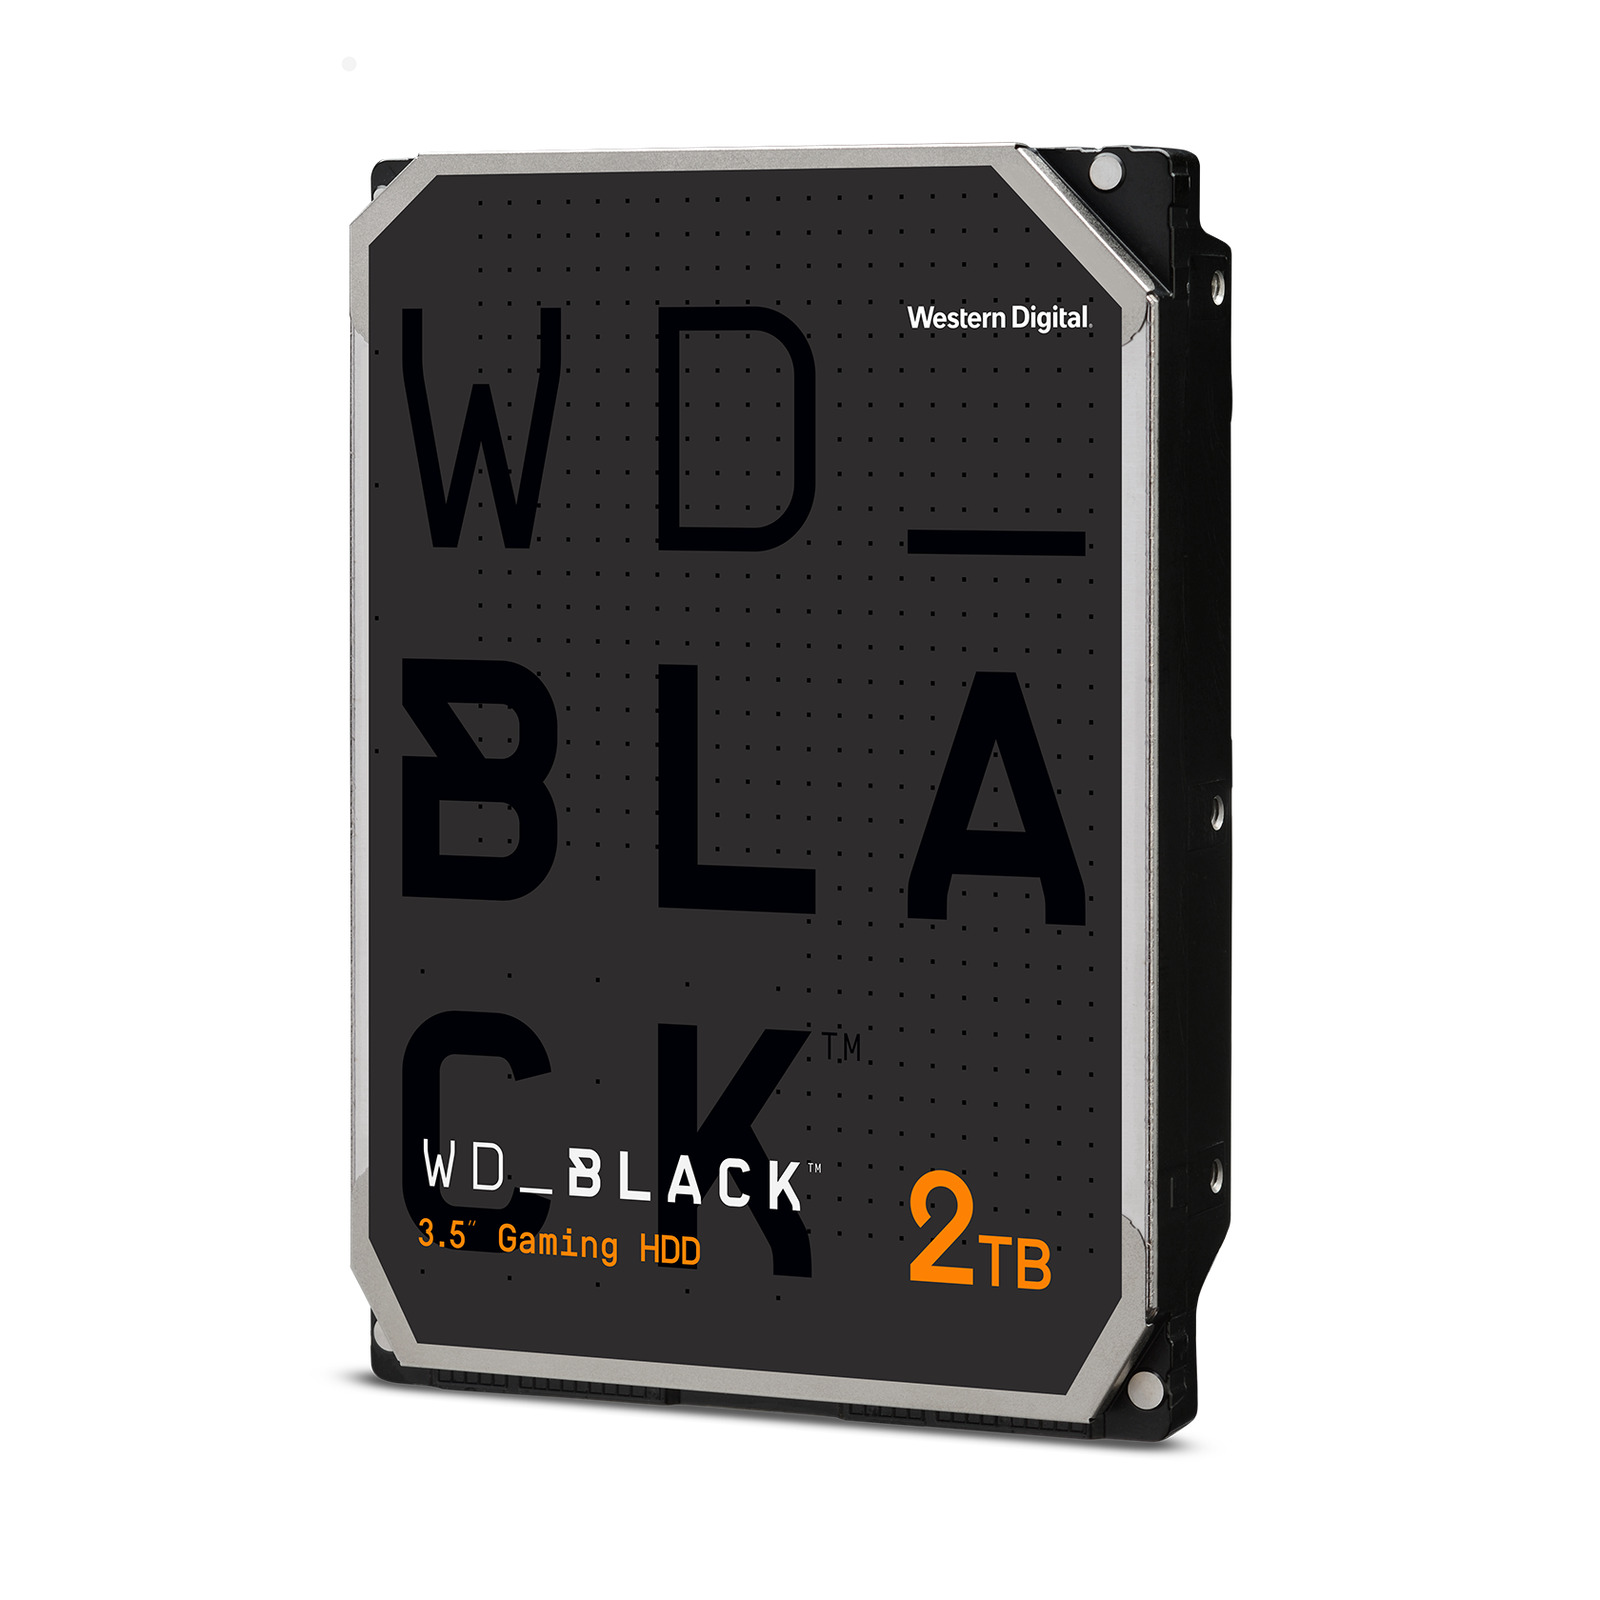 WD_BLACK 2TB 3.5'' Internal Gaming Hard Drive, 64MB Cache - WD2003FZEX